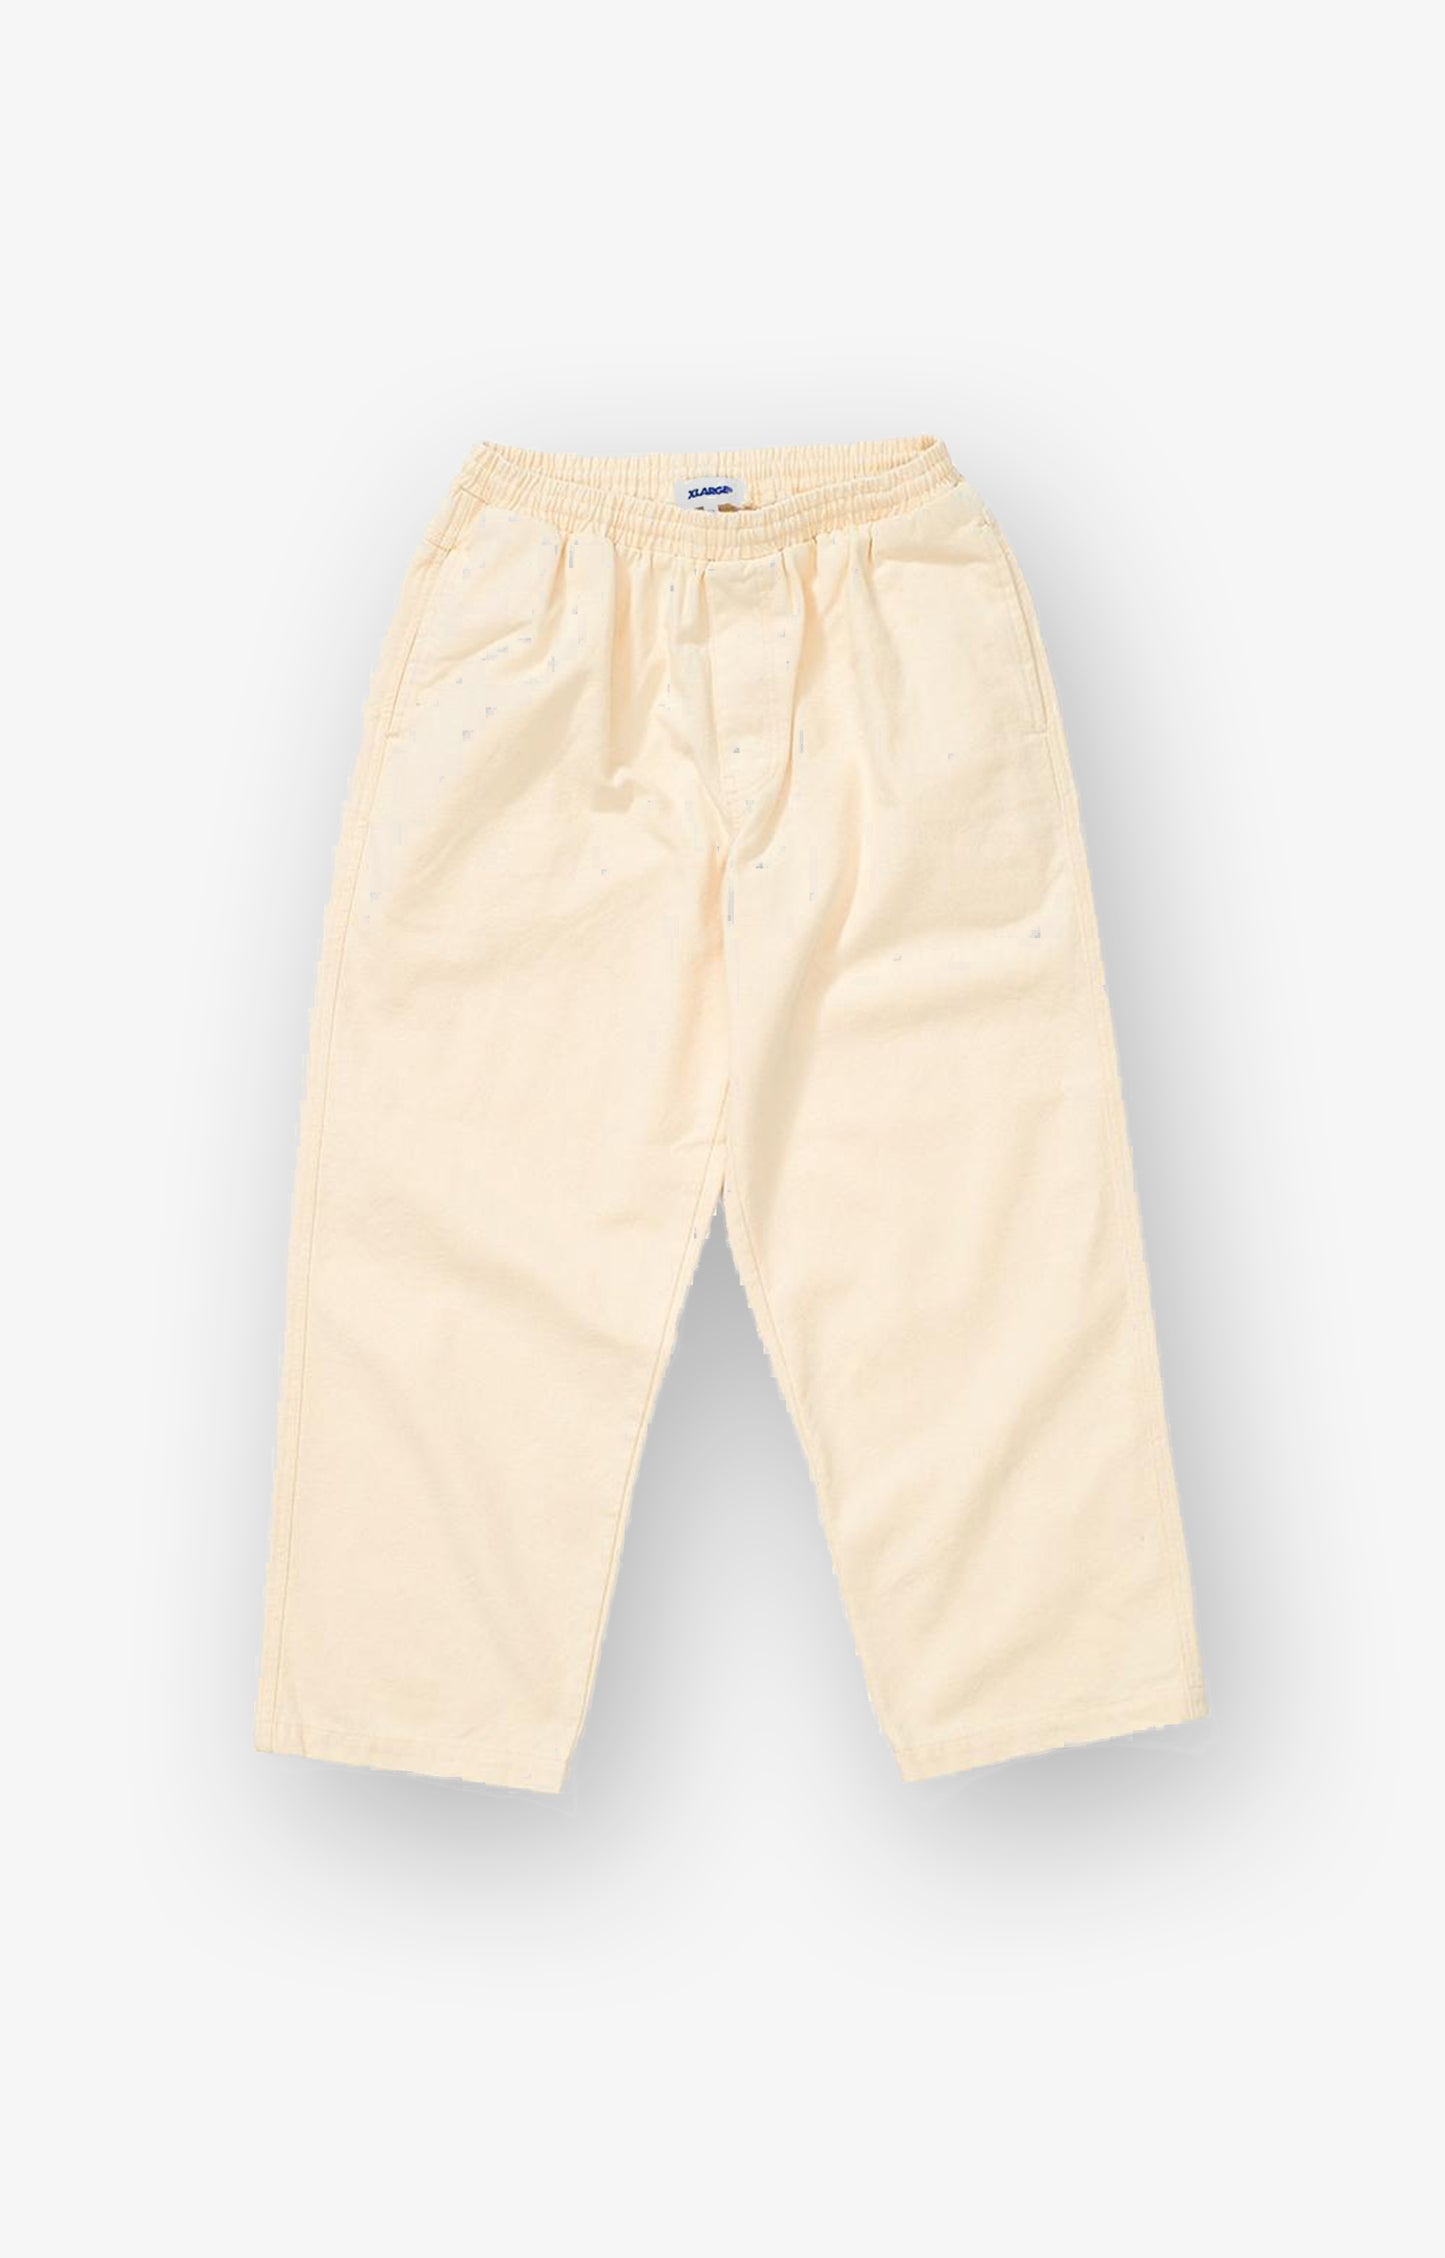 XLarge 91 Pants, Cream